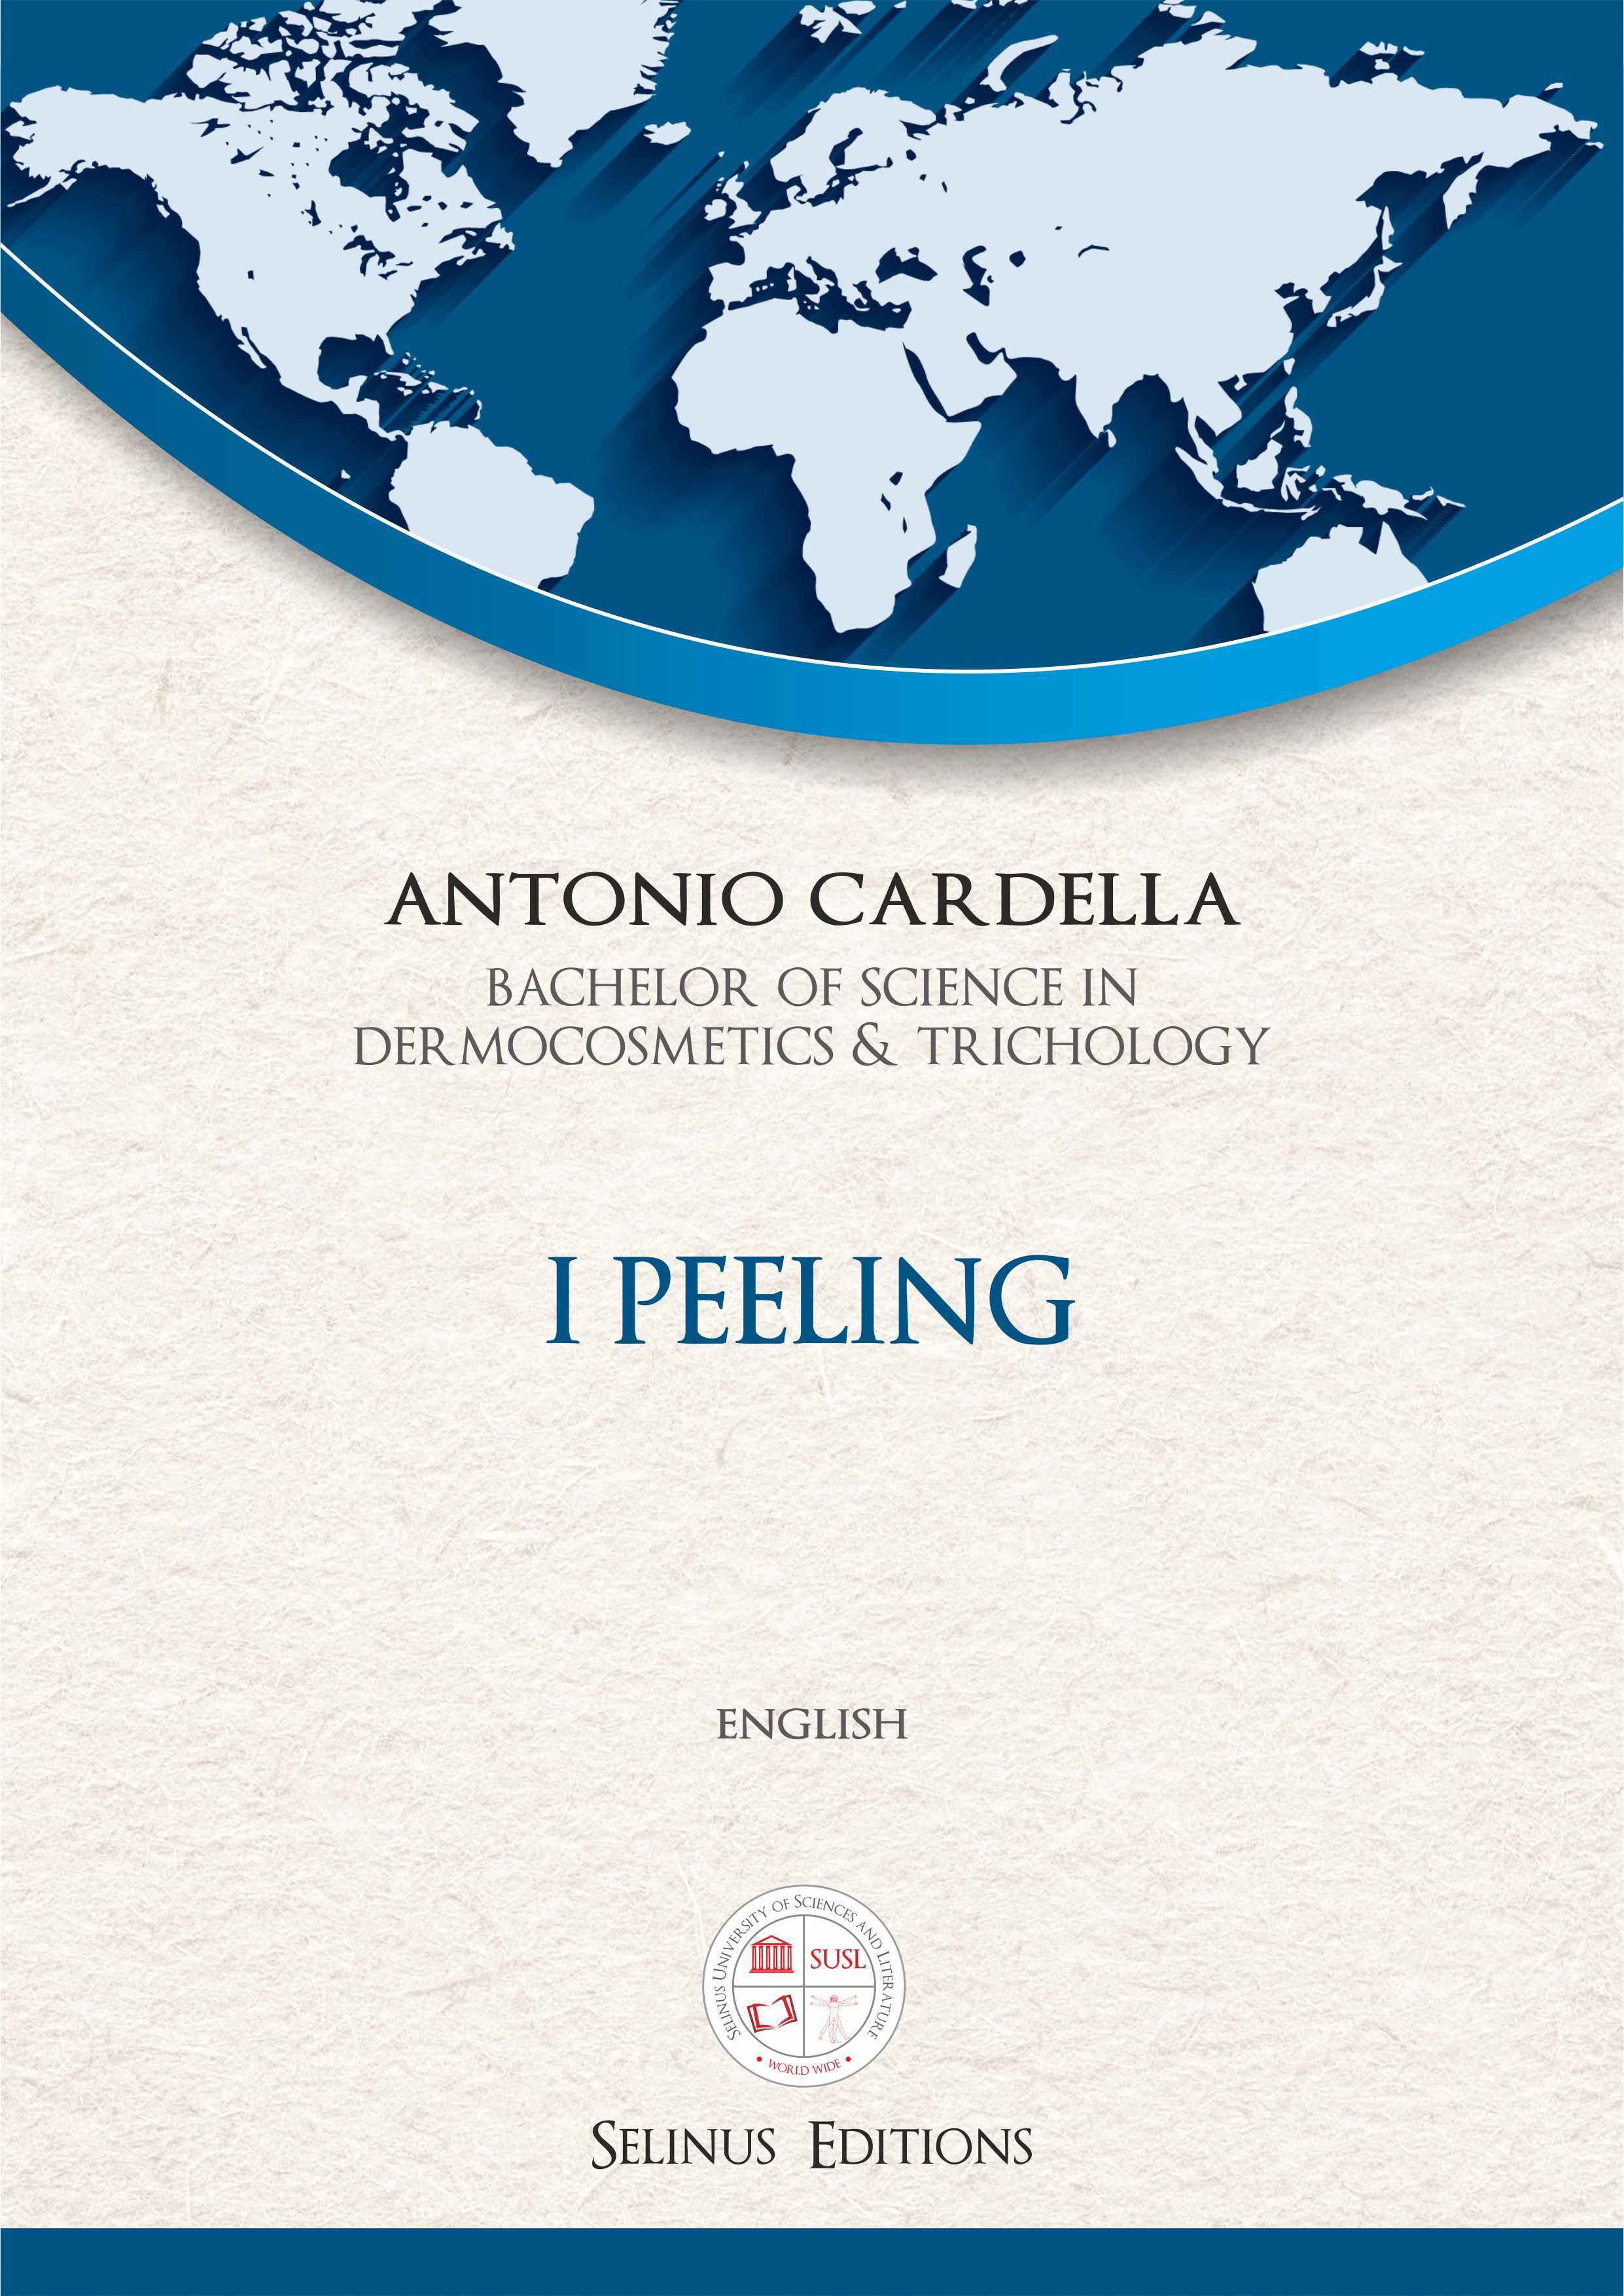 Thesis Antonio Cardella